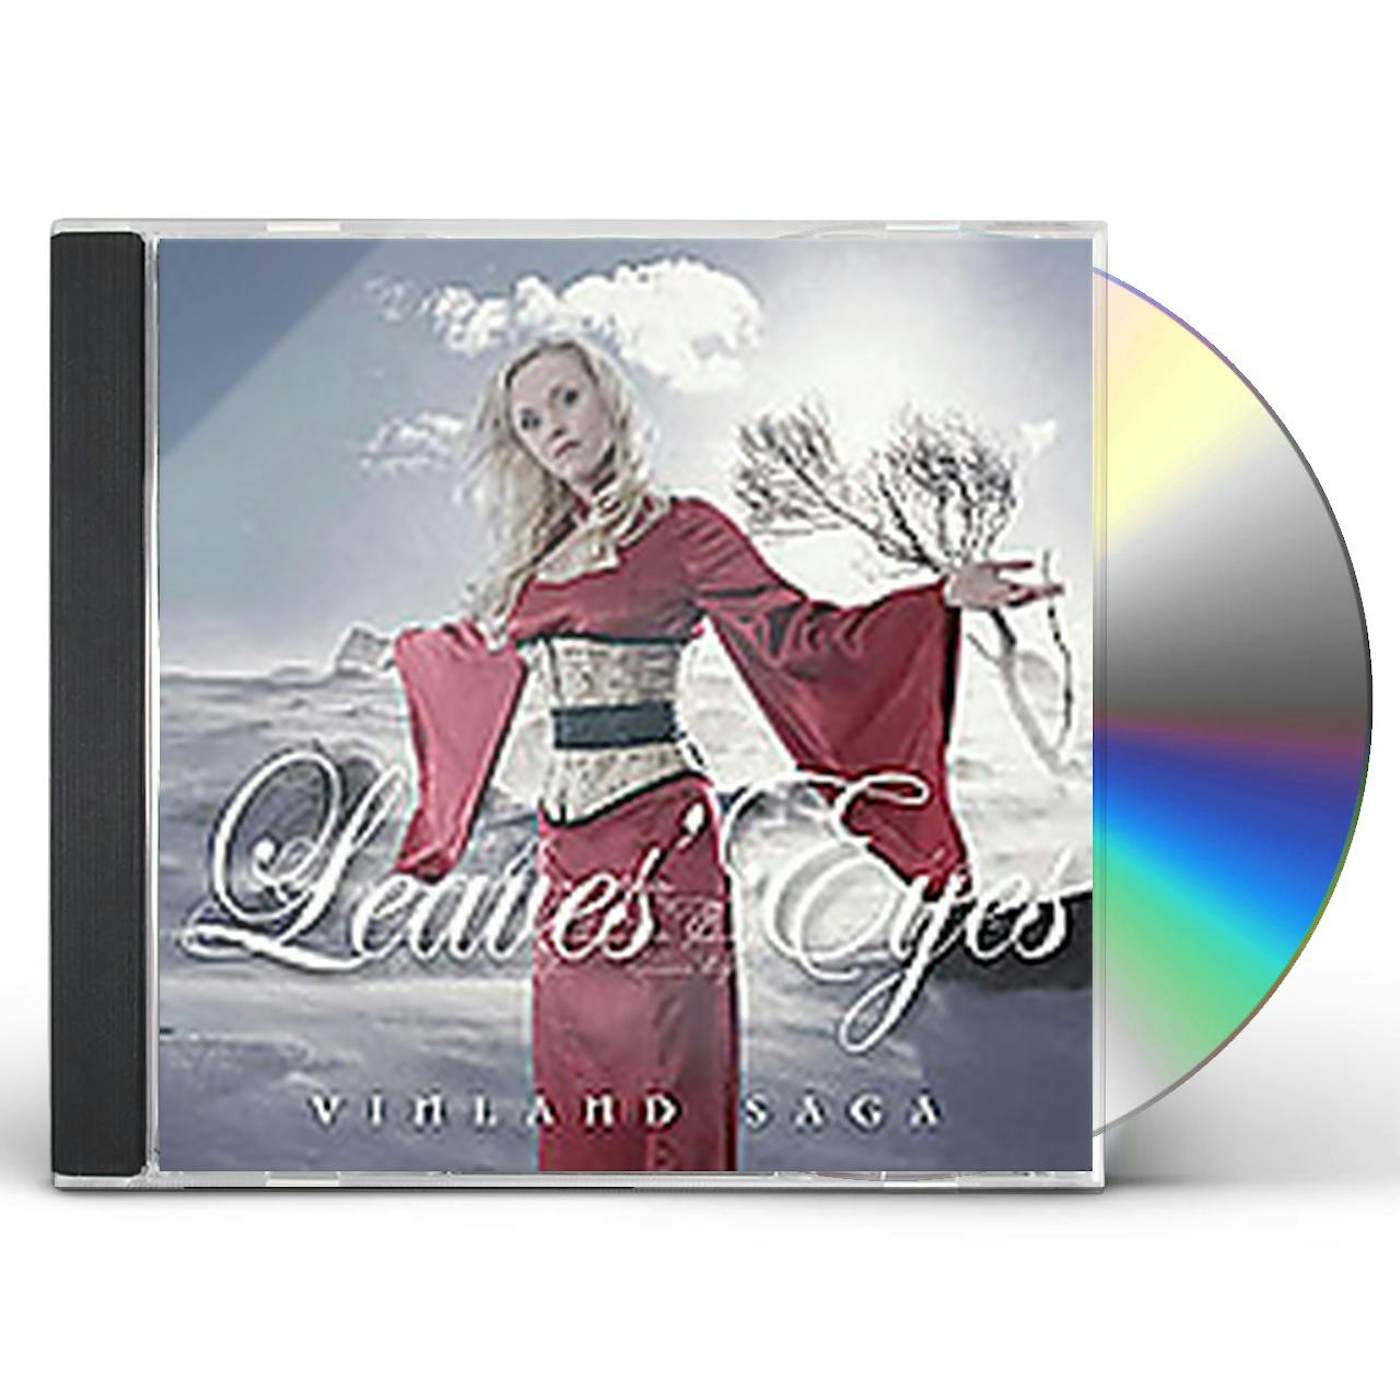 Leaves' Eyes VINLAND SAGA CD